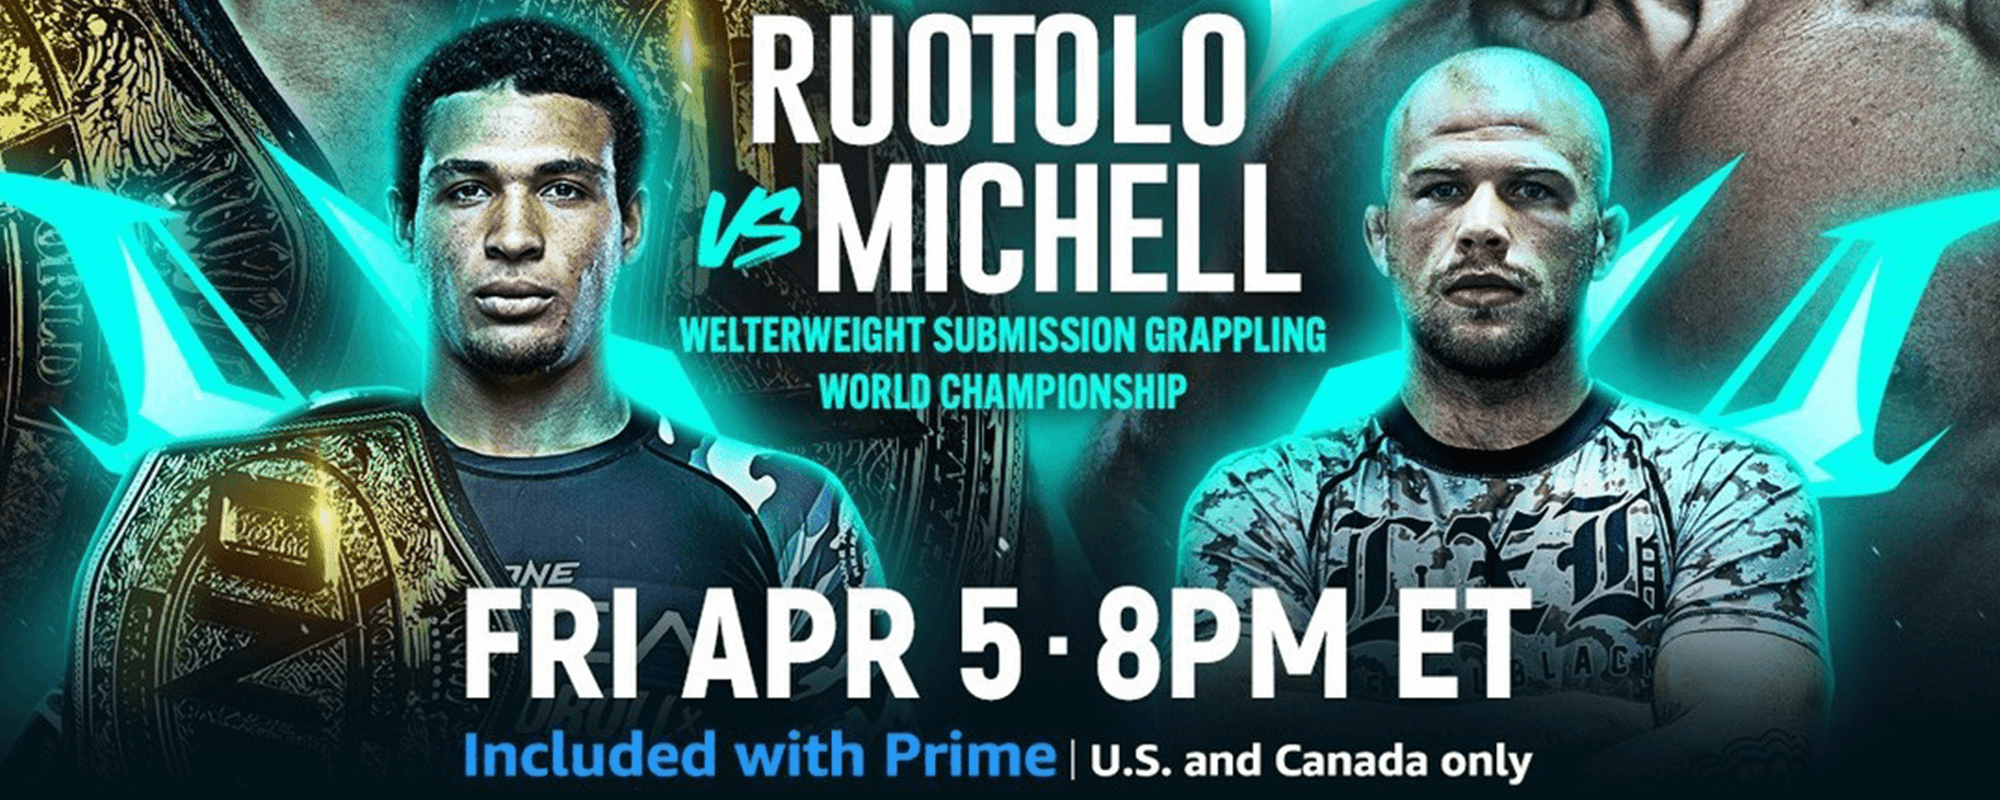 Izaak Michell vs. Tye Ruotolo: ONE Welterweight Submission Grappling World Championship Clash